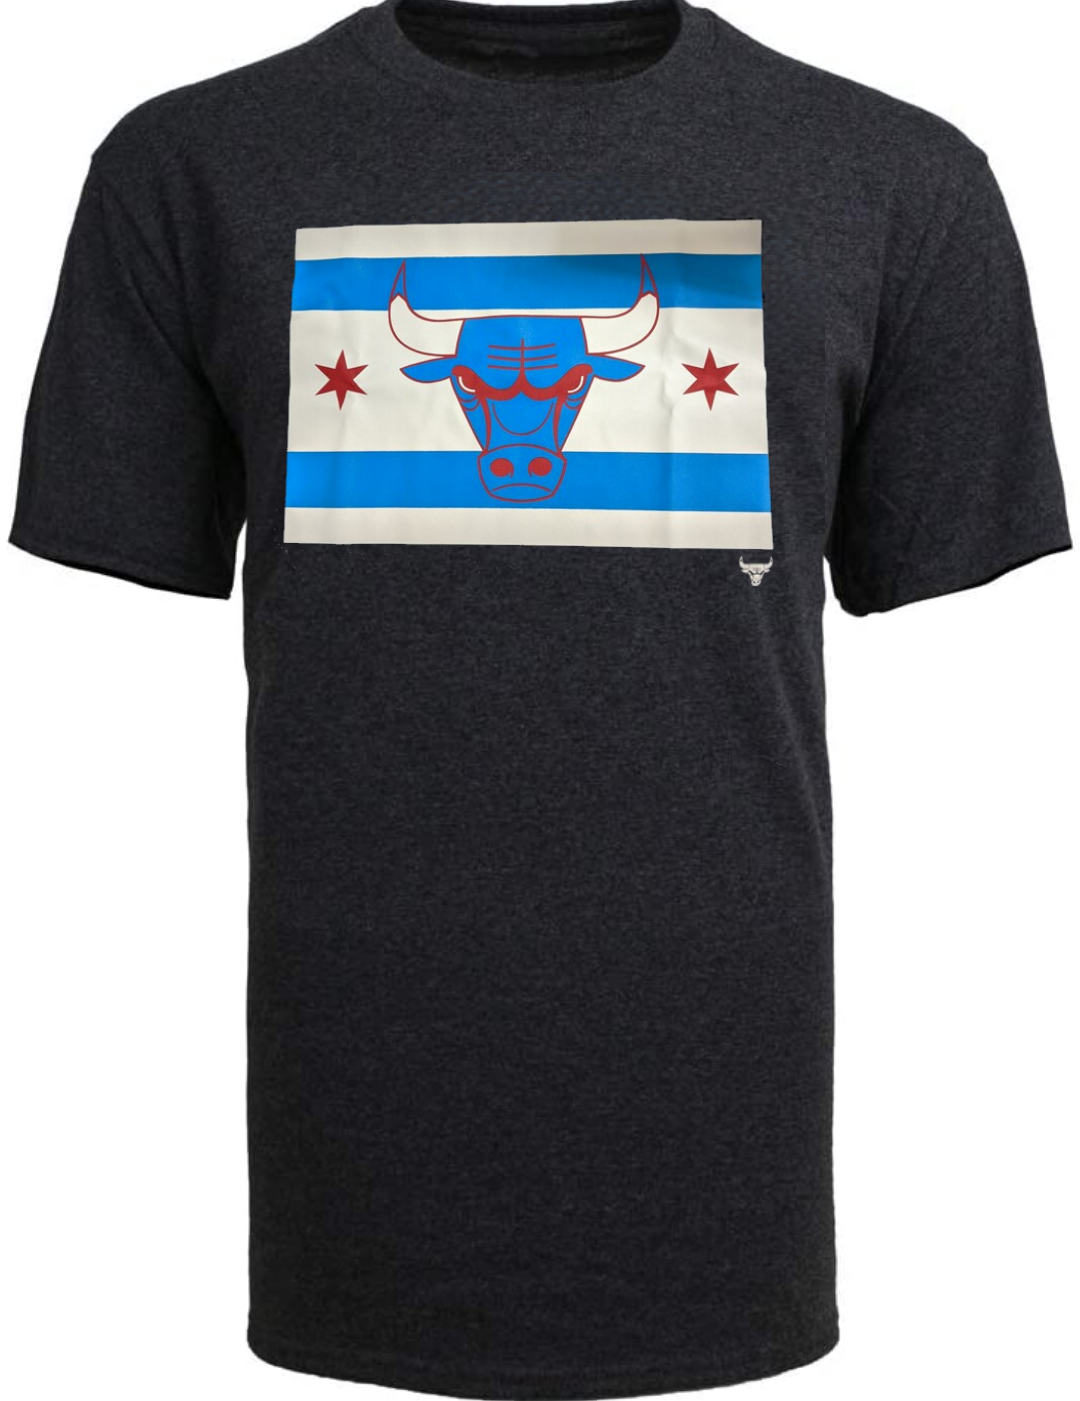 Men’s Chicago Bulls City Flag Regional Club Tee By ’47 Brand